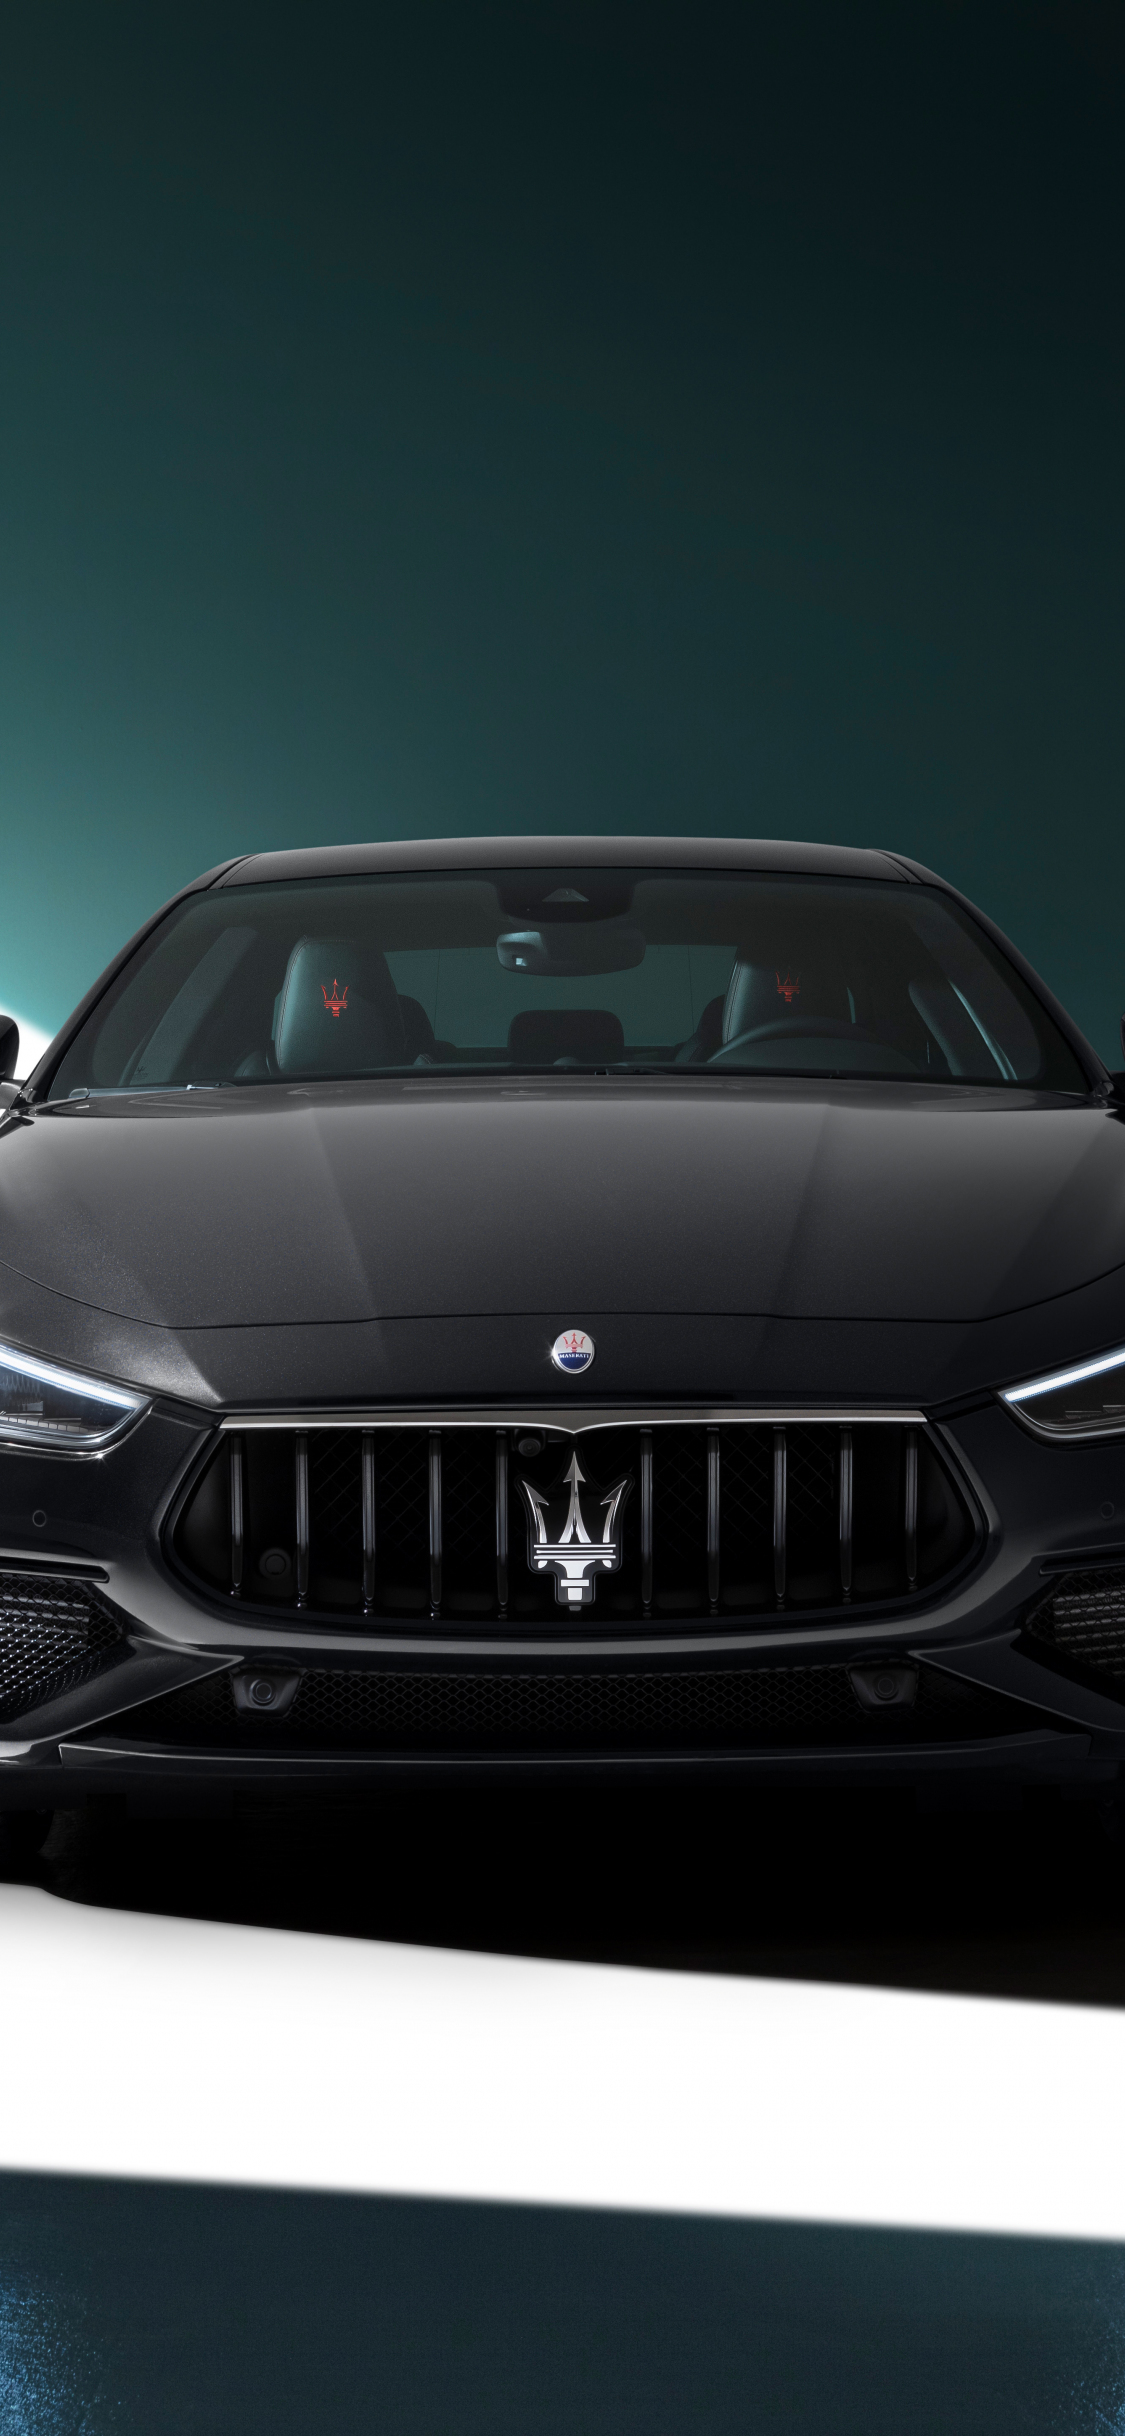 Download 1125x2436 Wallpaper Black 2021 Maserati Ghibli Luxury Sedan Iphone X 1125x2436 Hd Image Background 26590